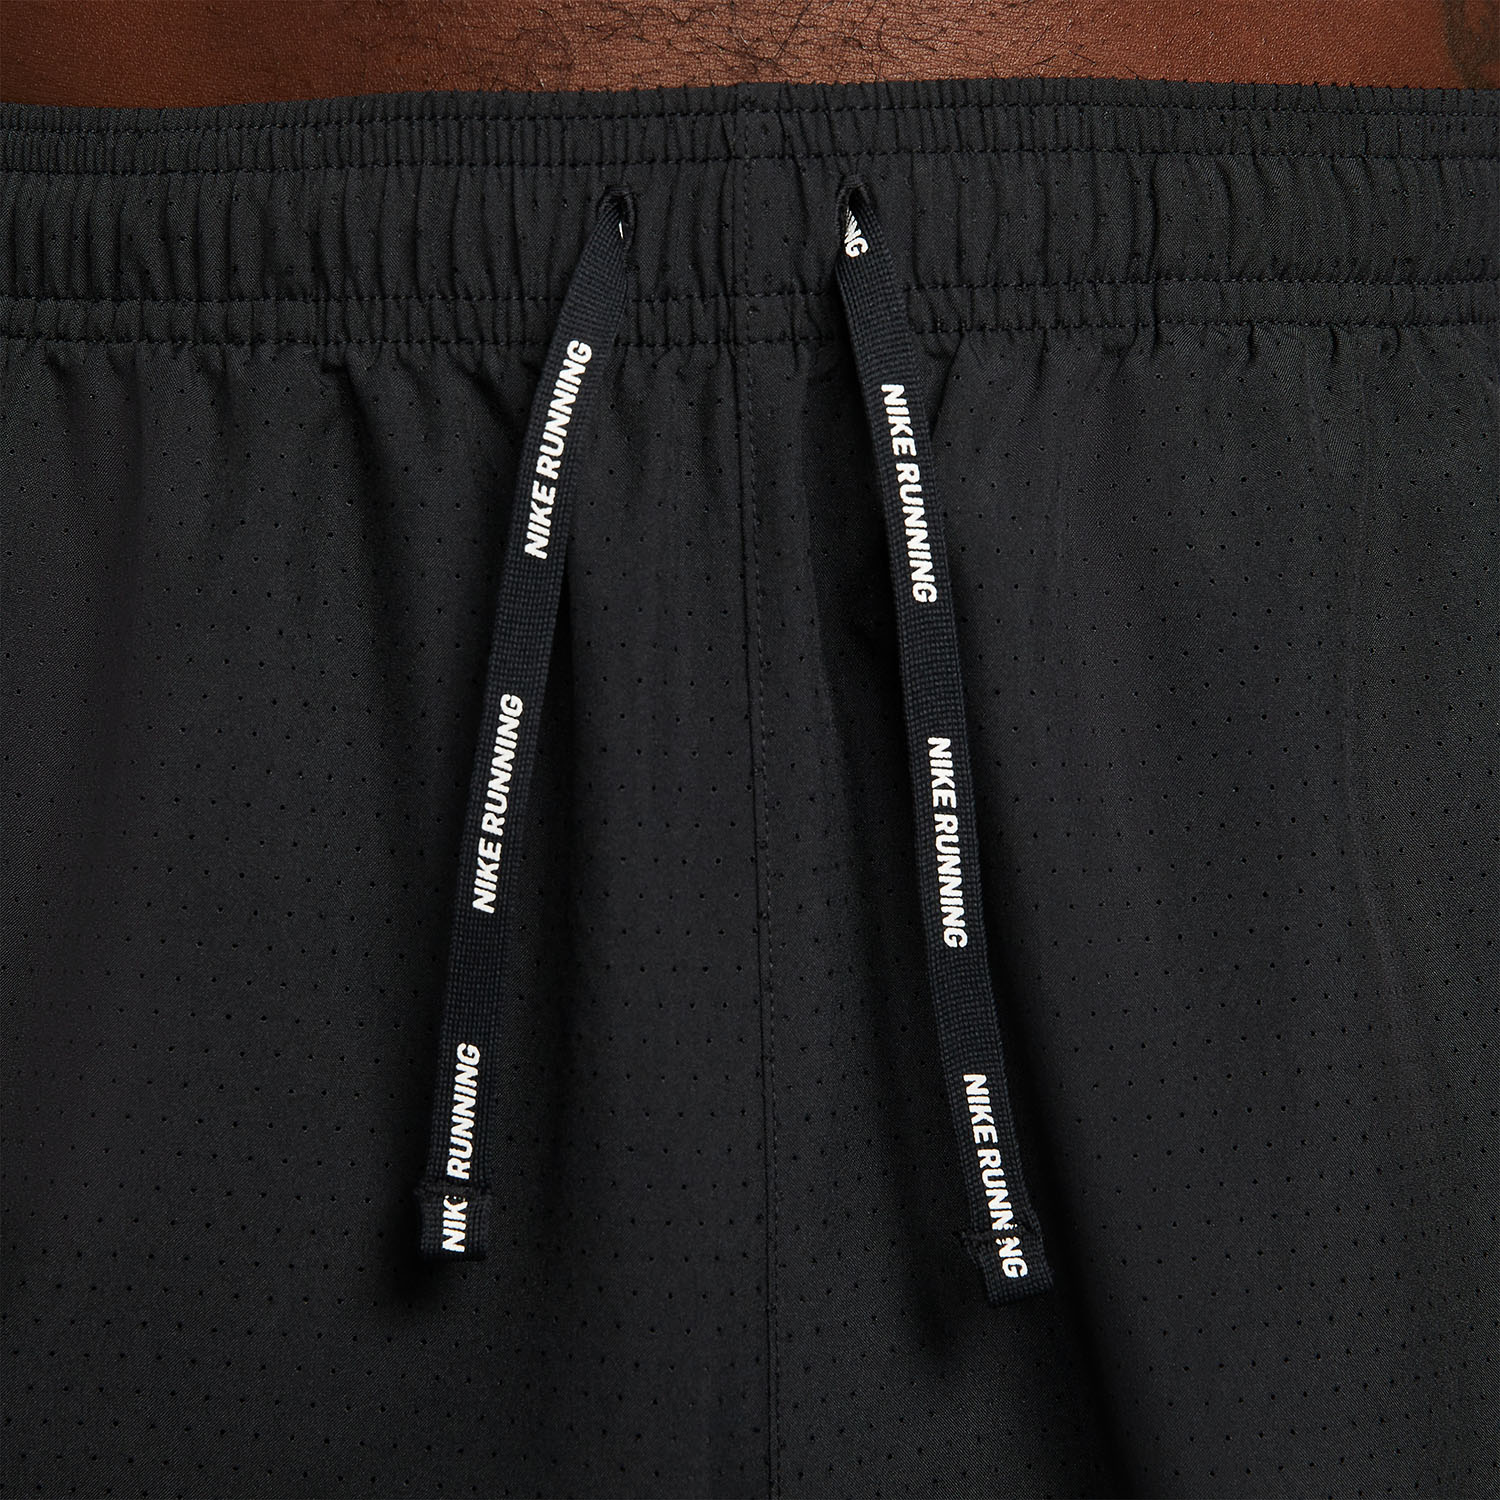 Nike Dri-FIT Fast Pants - Black/Reflective Silver